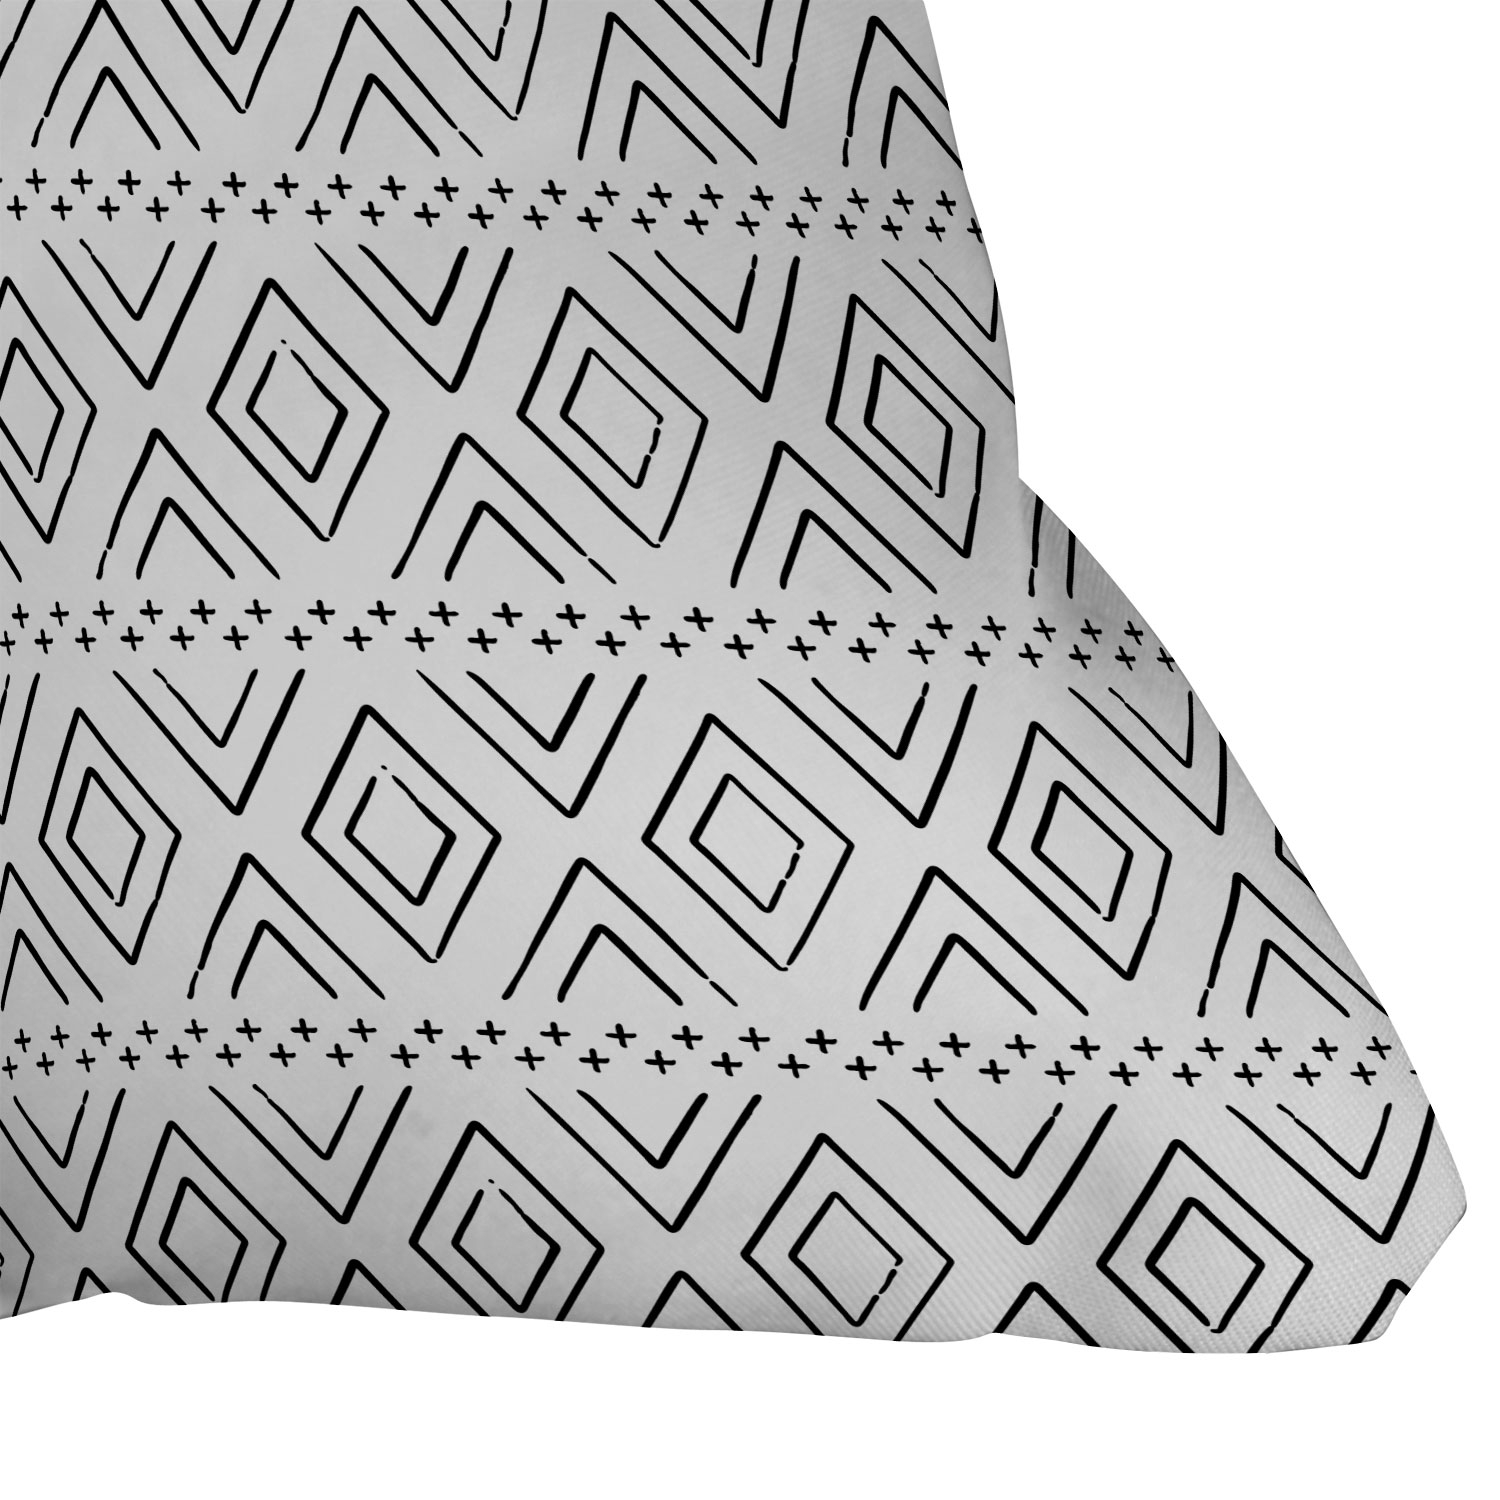 Farmhouse Diamonds Black by Little Arrow Design Co - Outdoor Throw Pillow 16" x 16" - Image 2